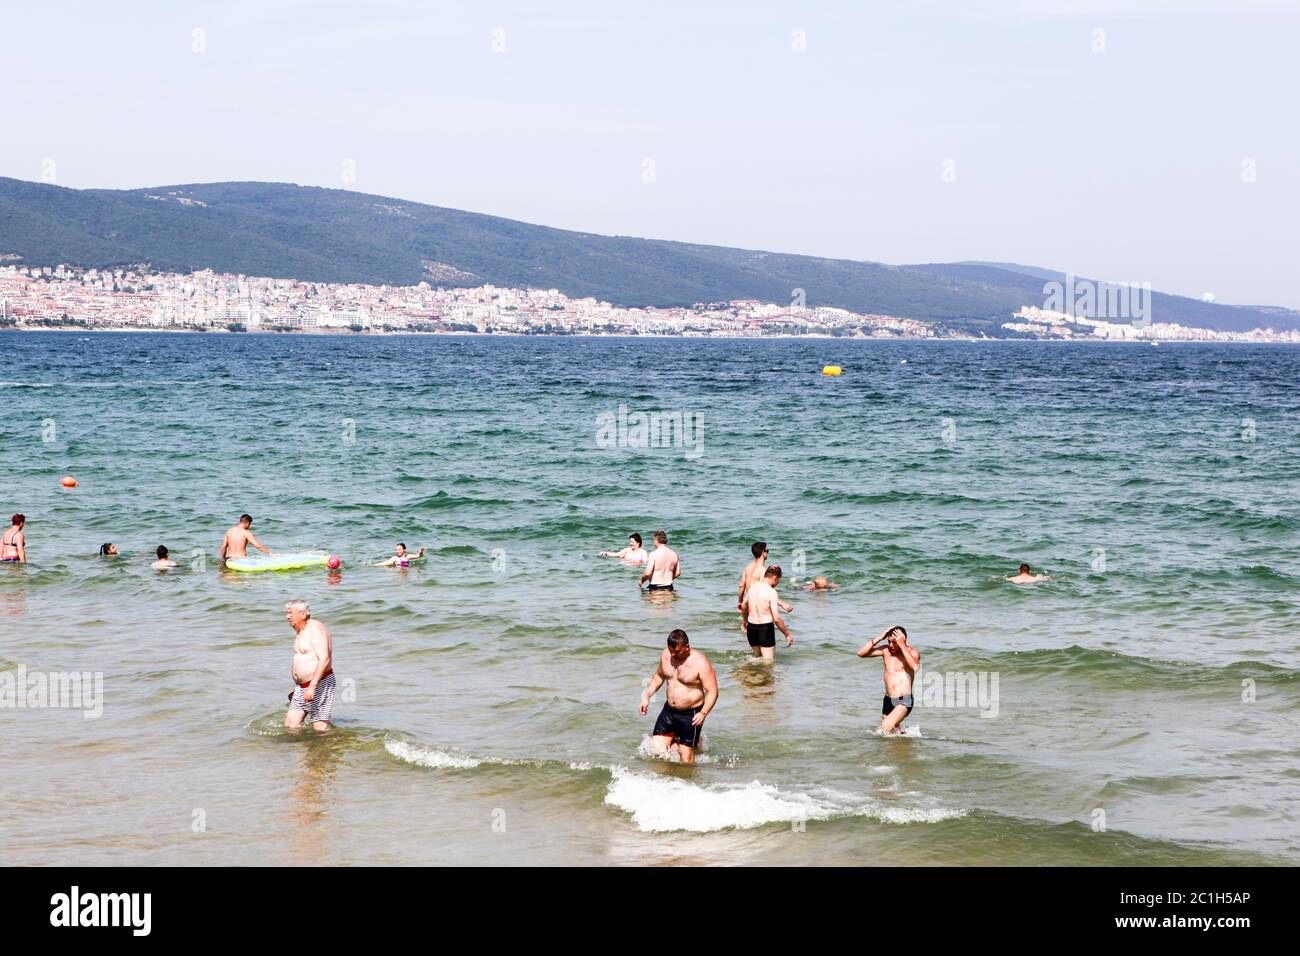 SUNNY BEACH, Bulgaria - June 26, 2018: Sunny Beach is a major seaside resort on the Black Sea coast of Bulgaria, located approxi Stock Photo